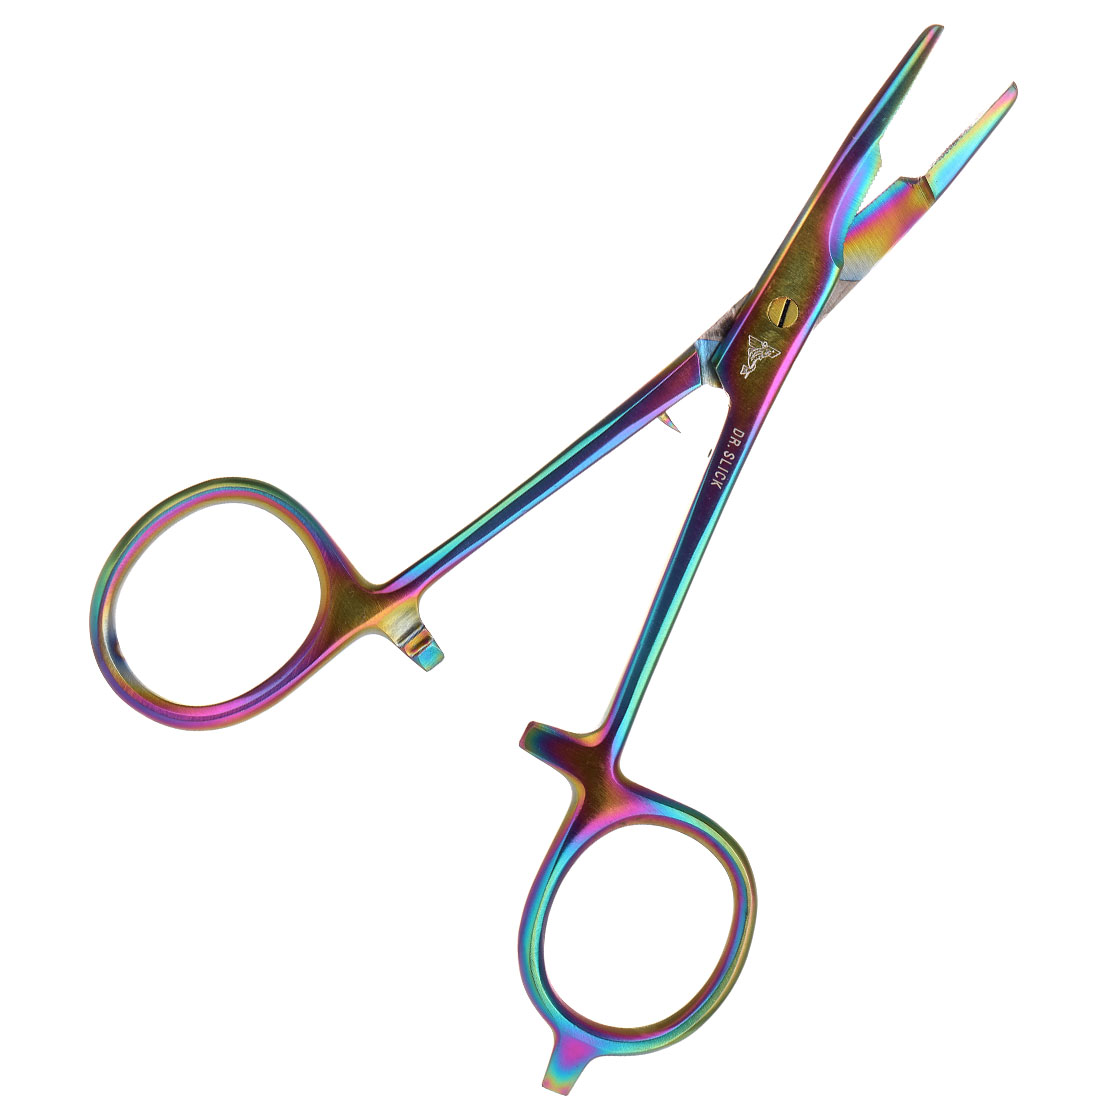 Dr. Slick Scissor Clamp 5,5 Zangenschere prism finish, Pincers and Hook  Pliers, Tools, Equipment